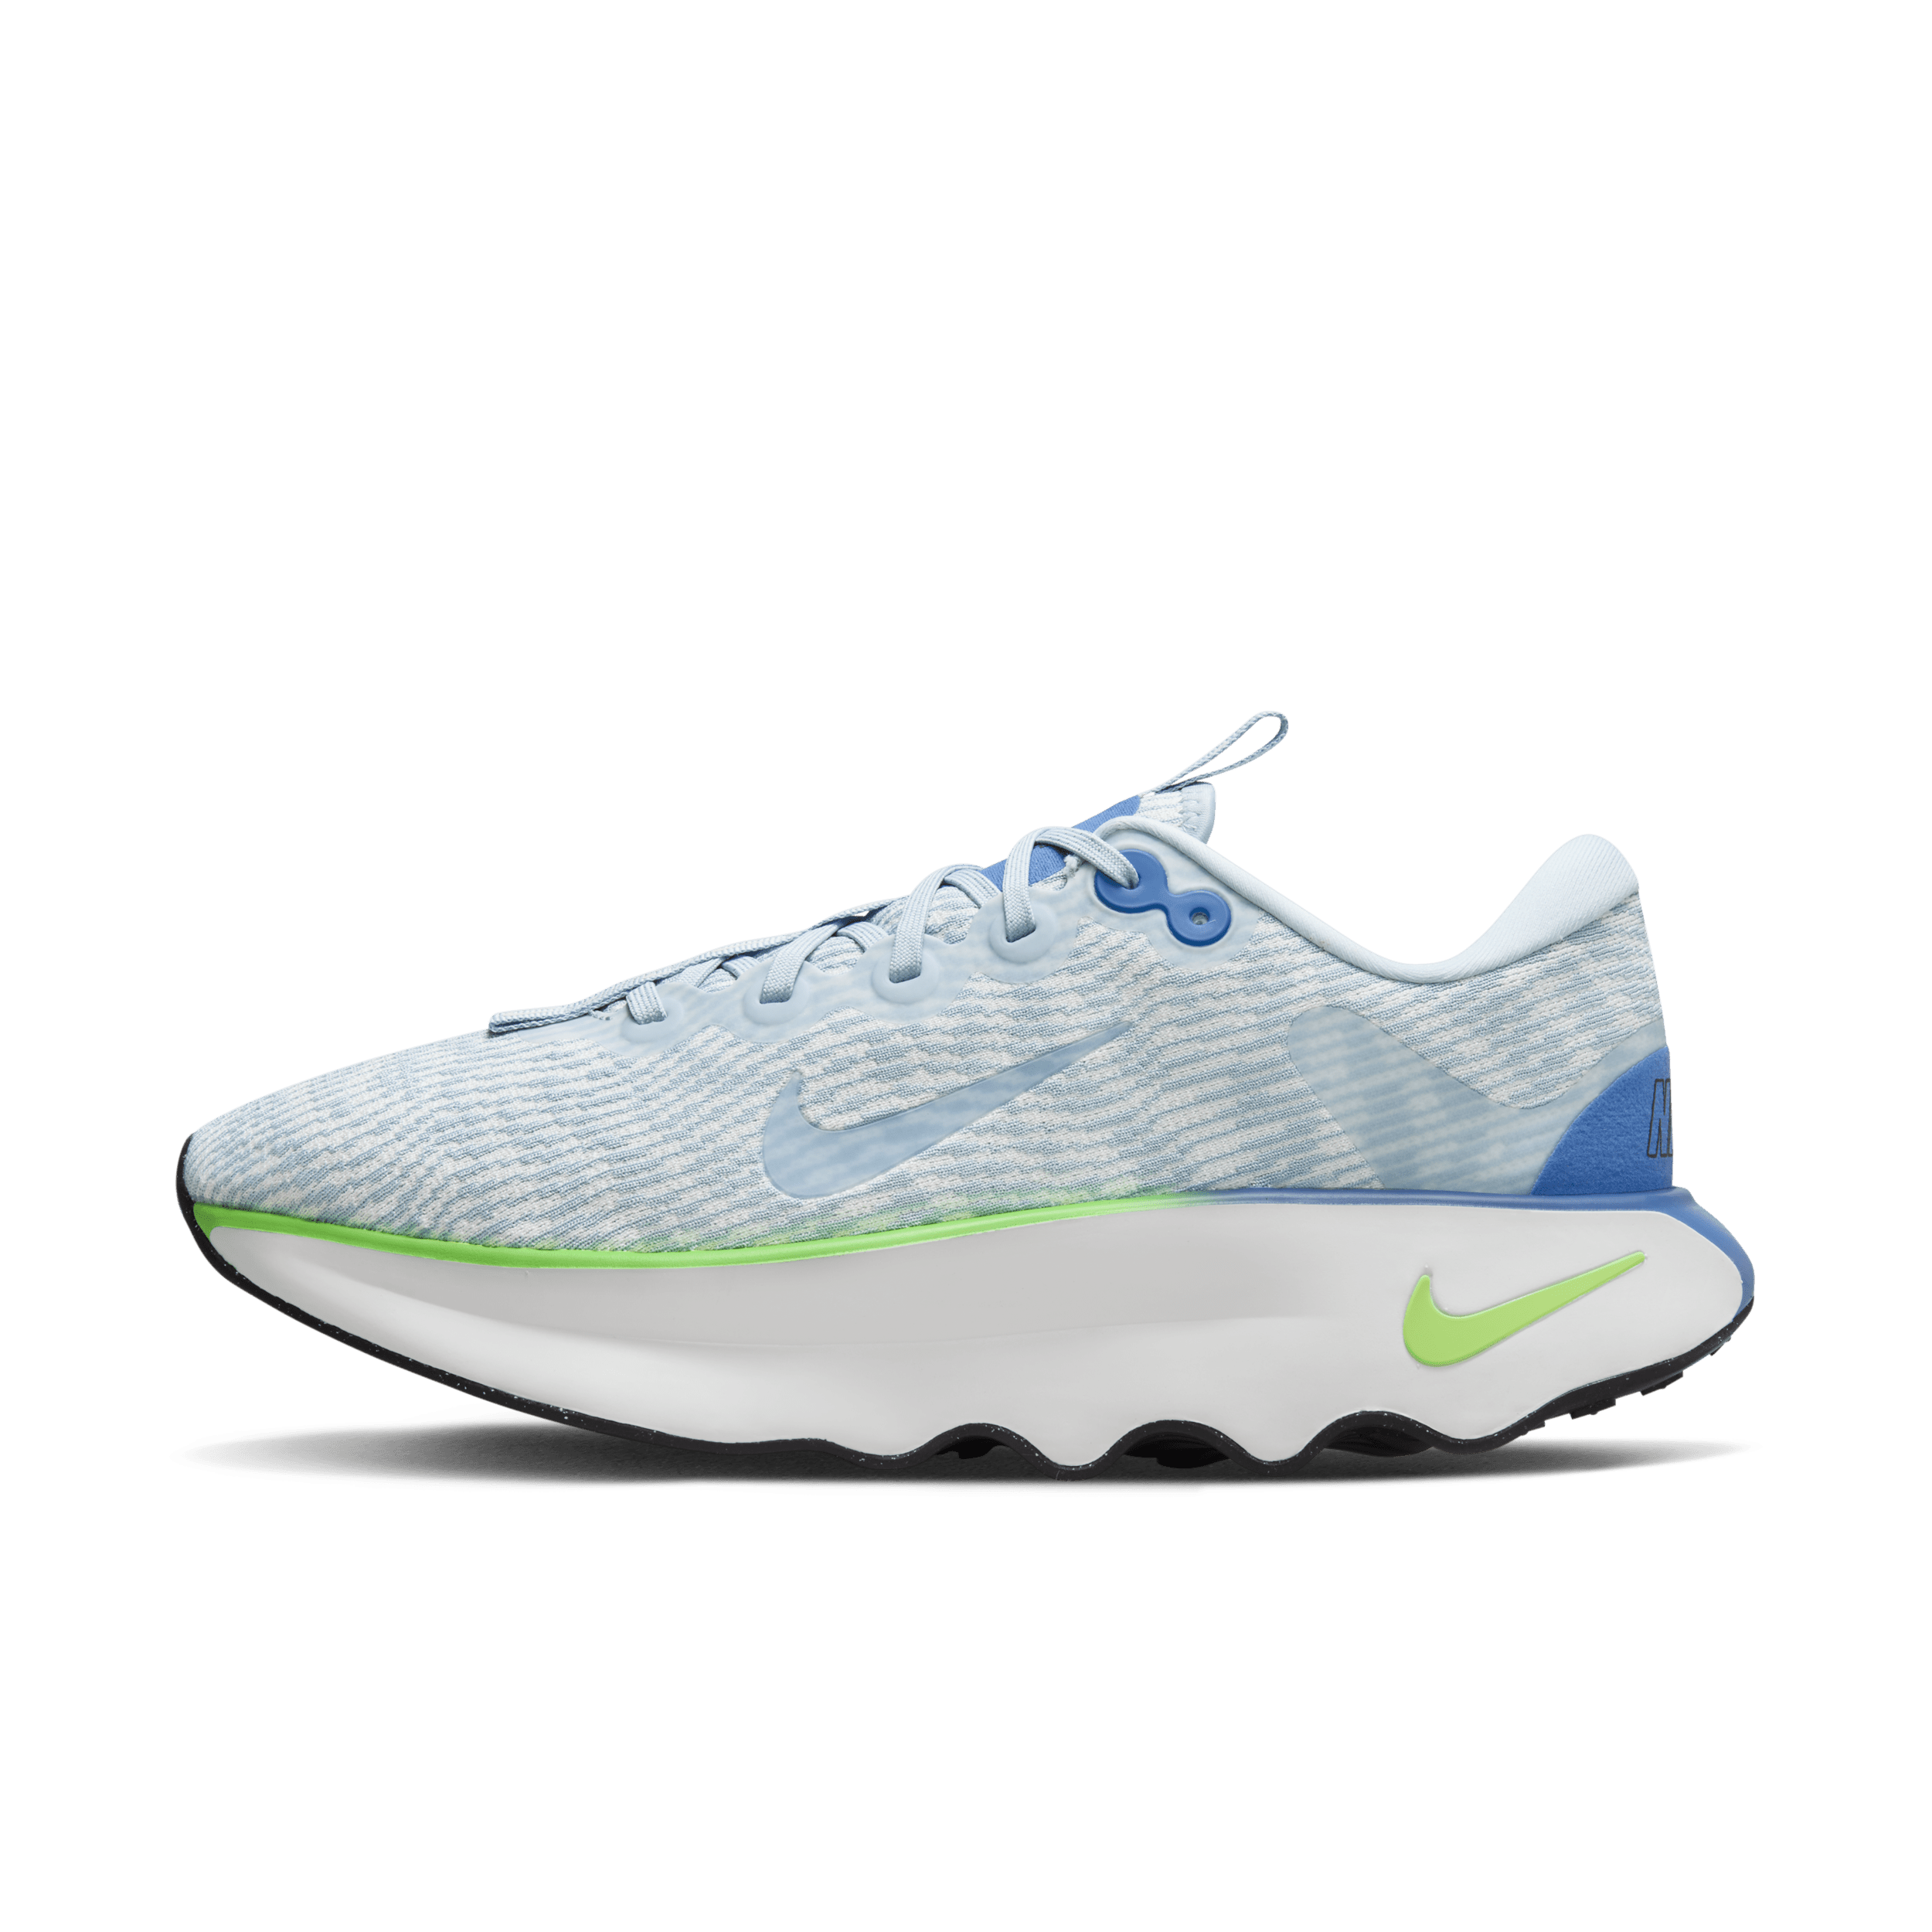 Scarpa da camminata Nike Motiva – Uomo - Blu